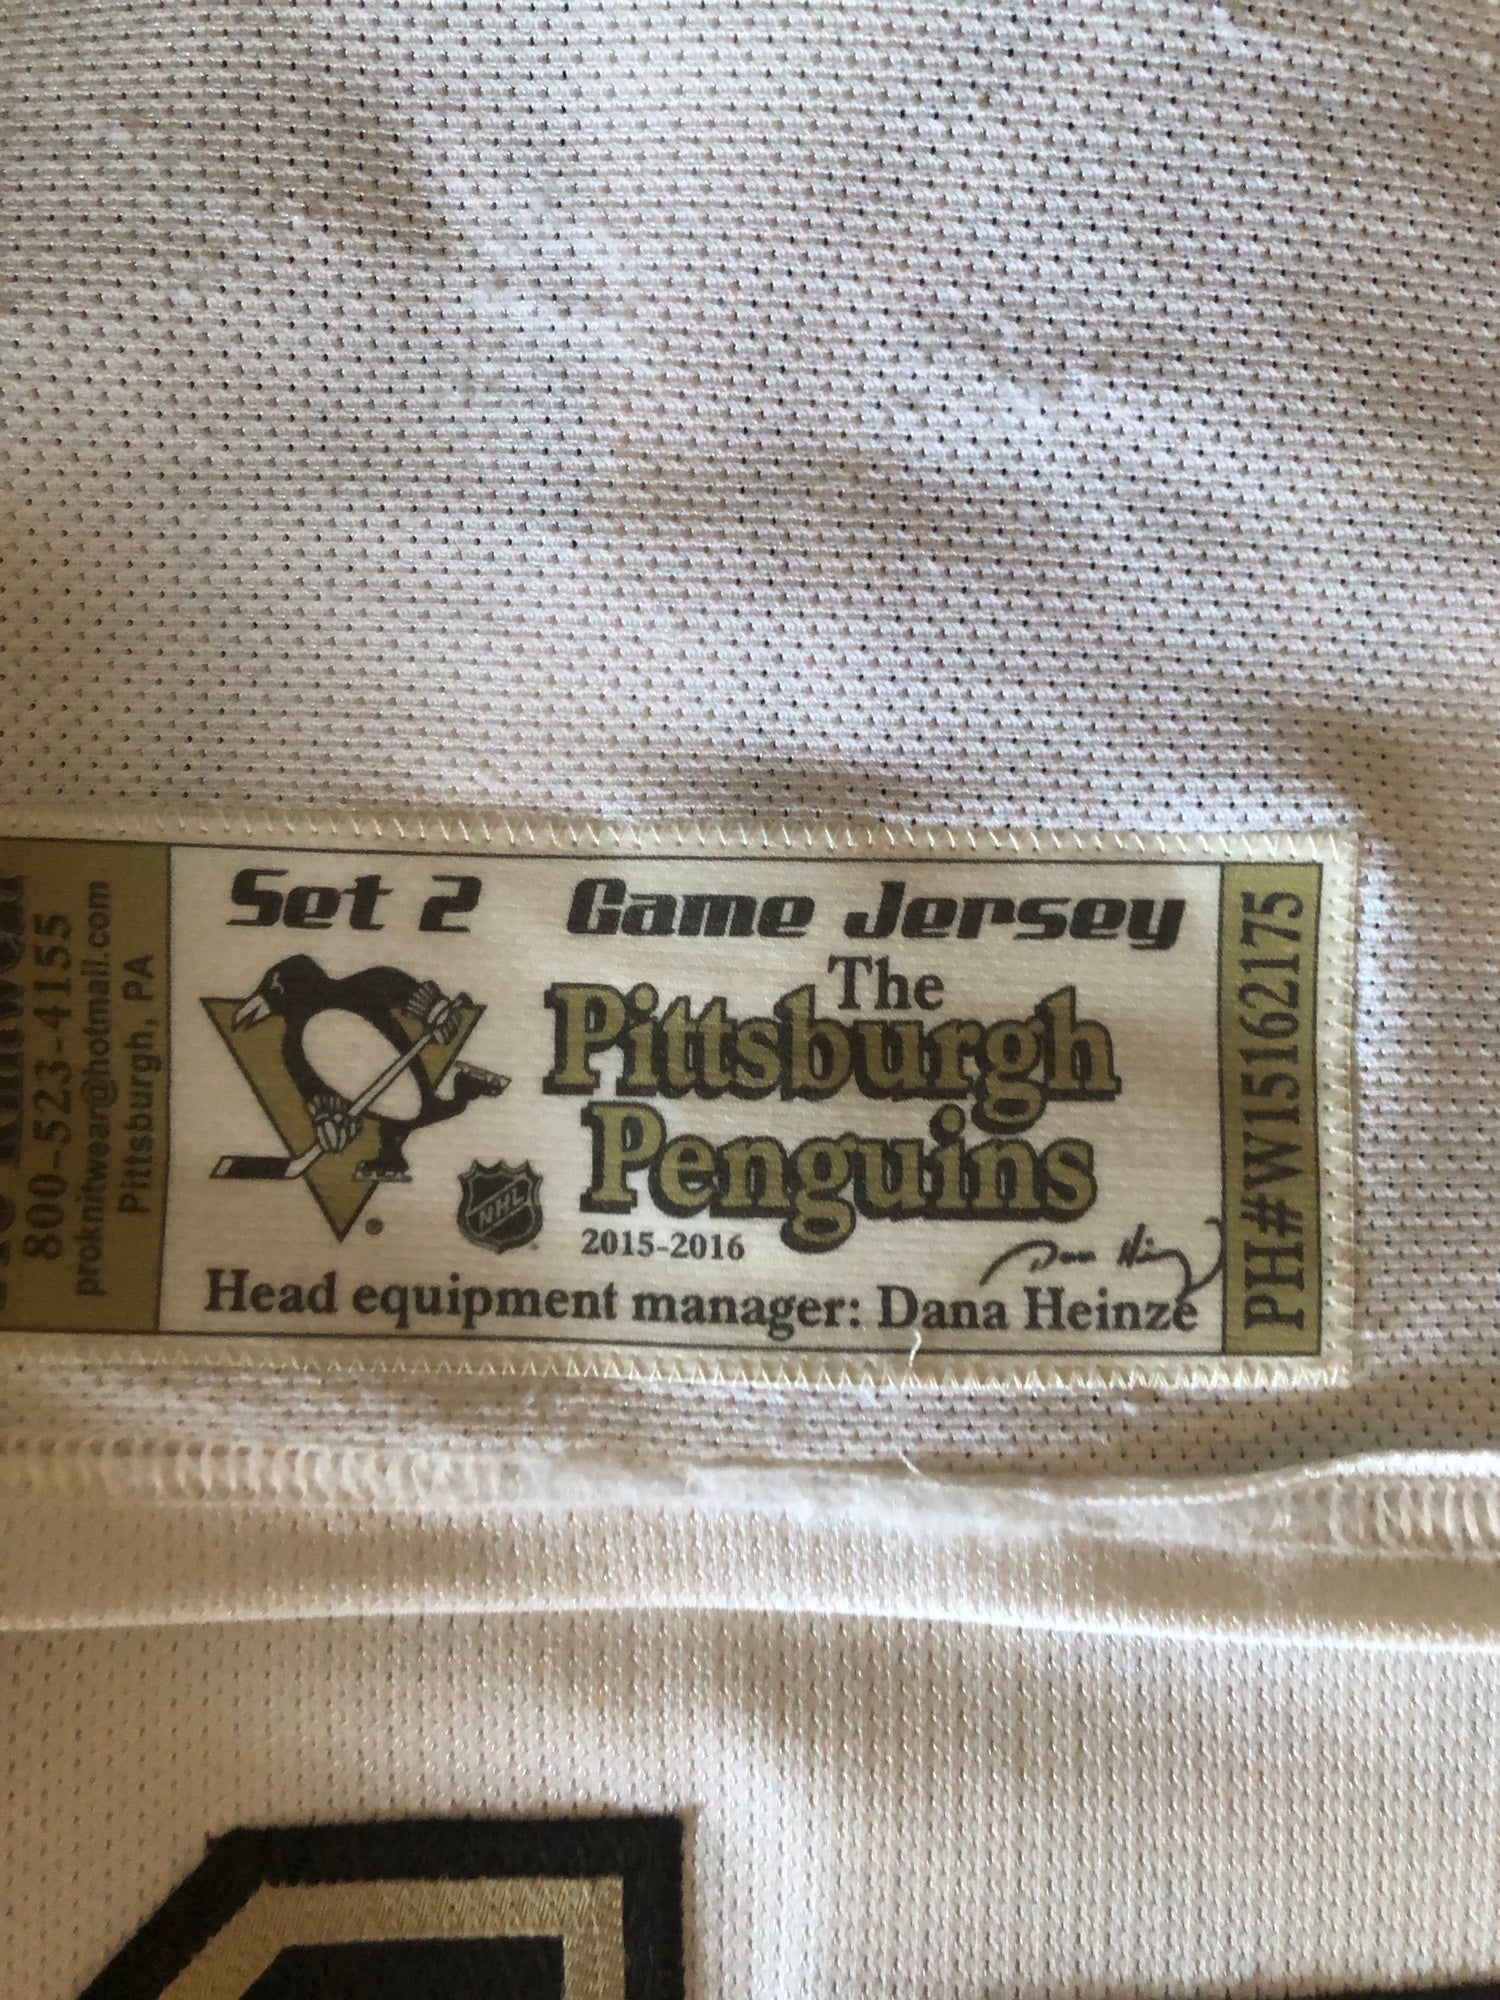 MLB Andrew McCutchen Pittsburgh Pirates 2012 Camo Majestic Jersey Size 56 -  NEW NWT * RARE